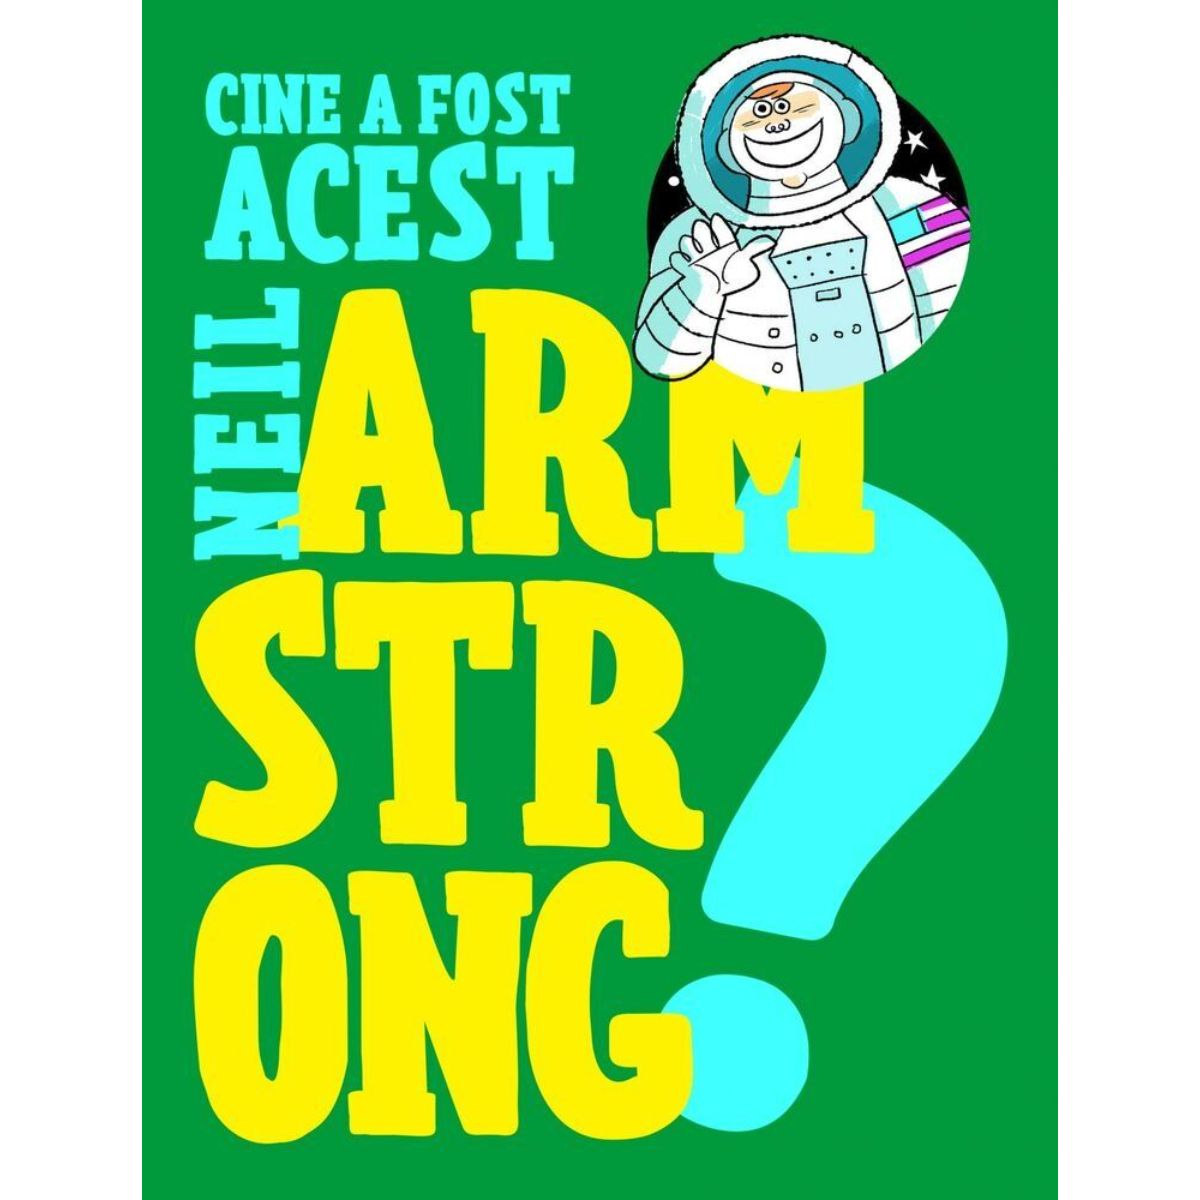 Cine a fost acest... Neil Armstrong? Franco Cosimo Panini